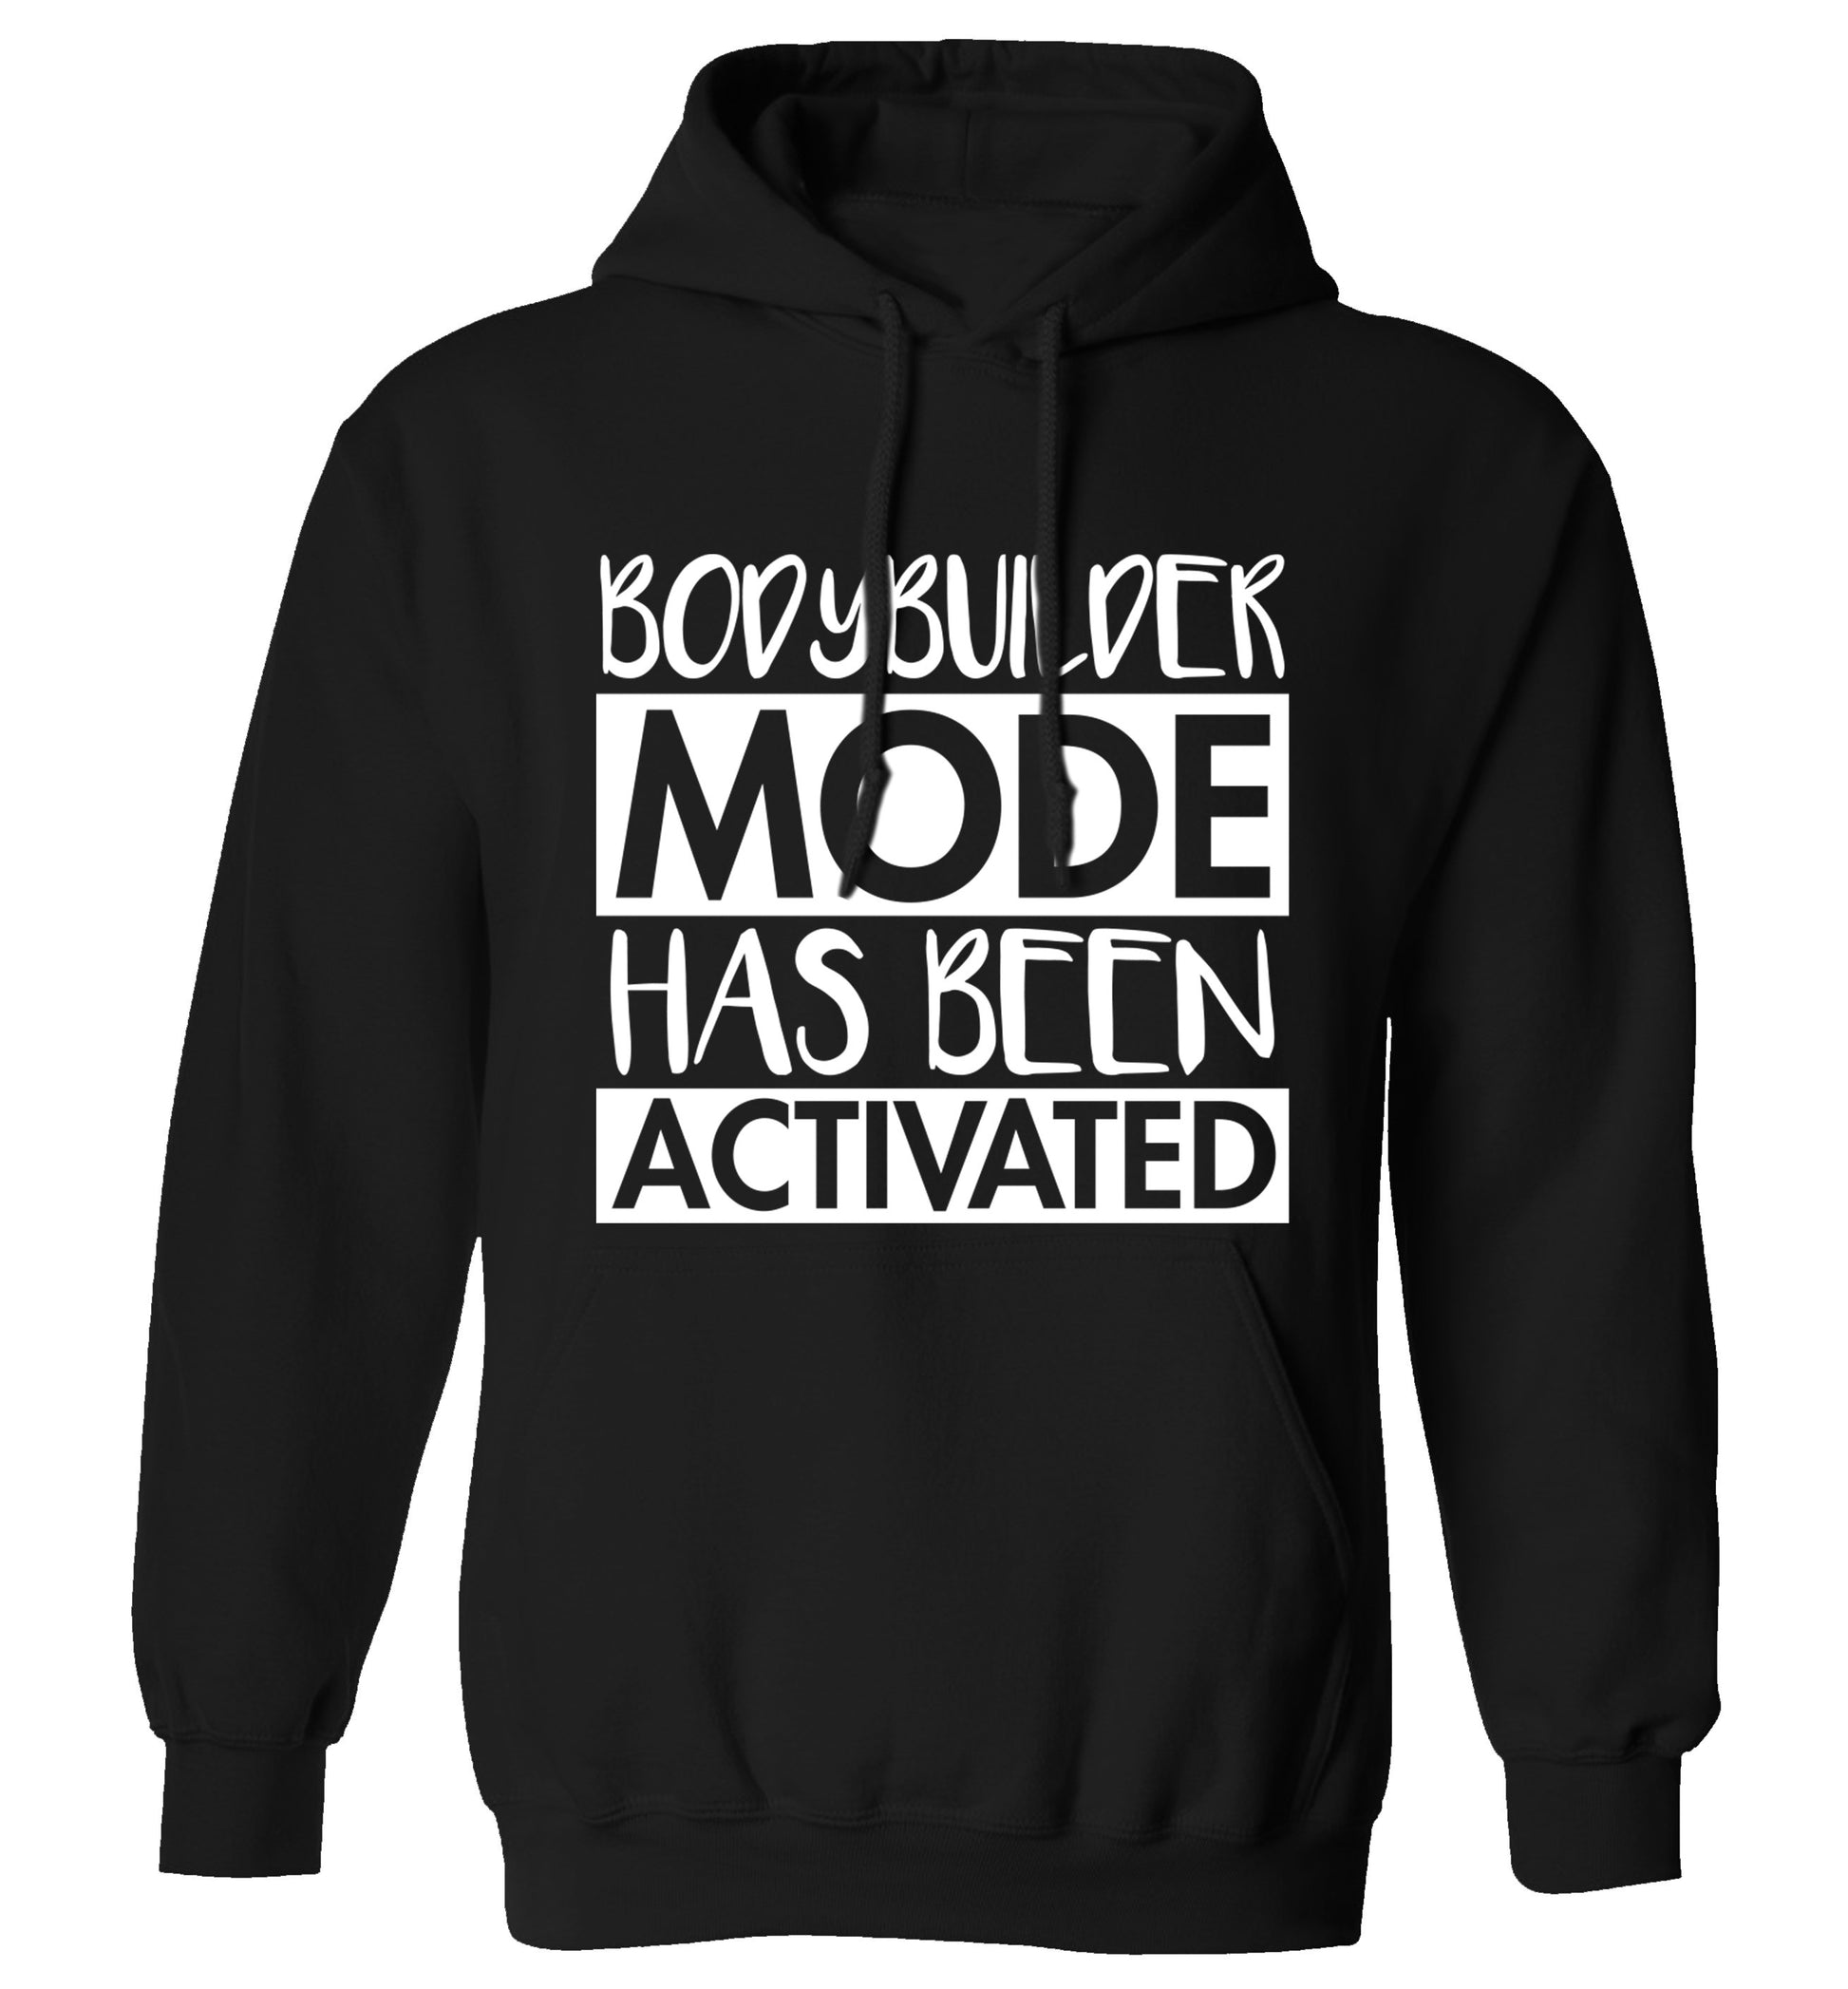 Bodybuilder mode activated adults unisex black hoodie 2XL